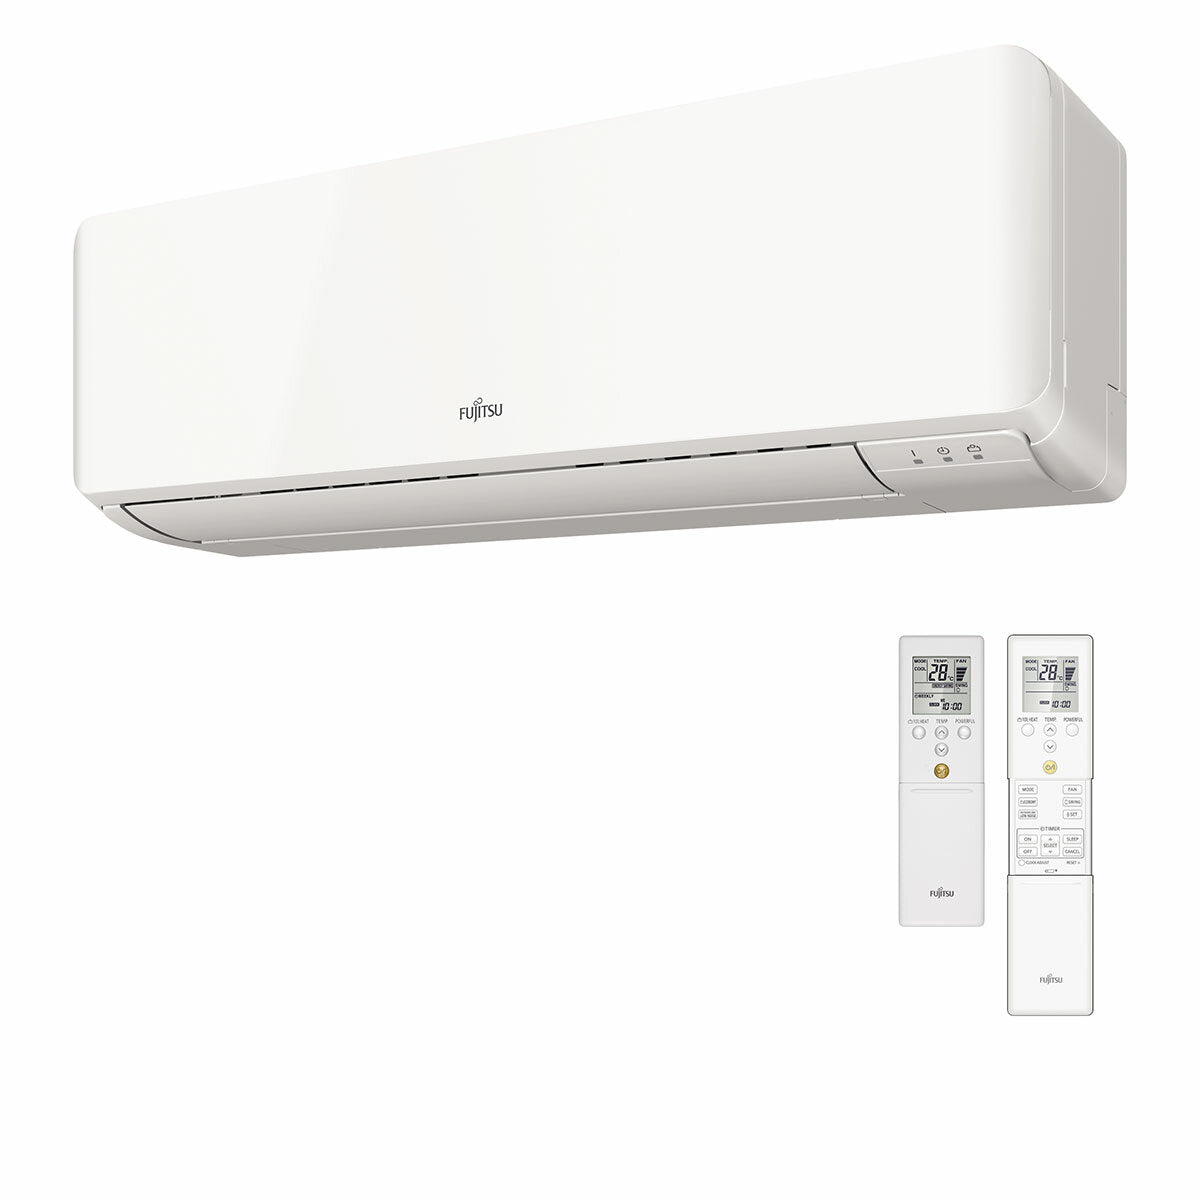 Fujitsu air conditioner KM WiFi Series dual split 7000+9000 BTU inverter A+++ external unit 4 kW